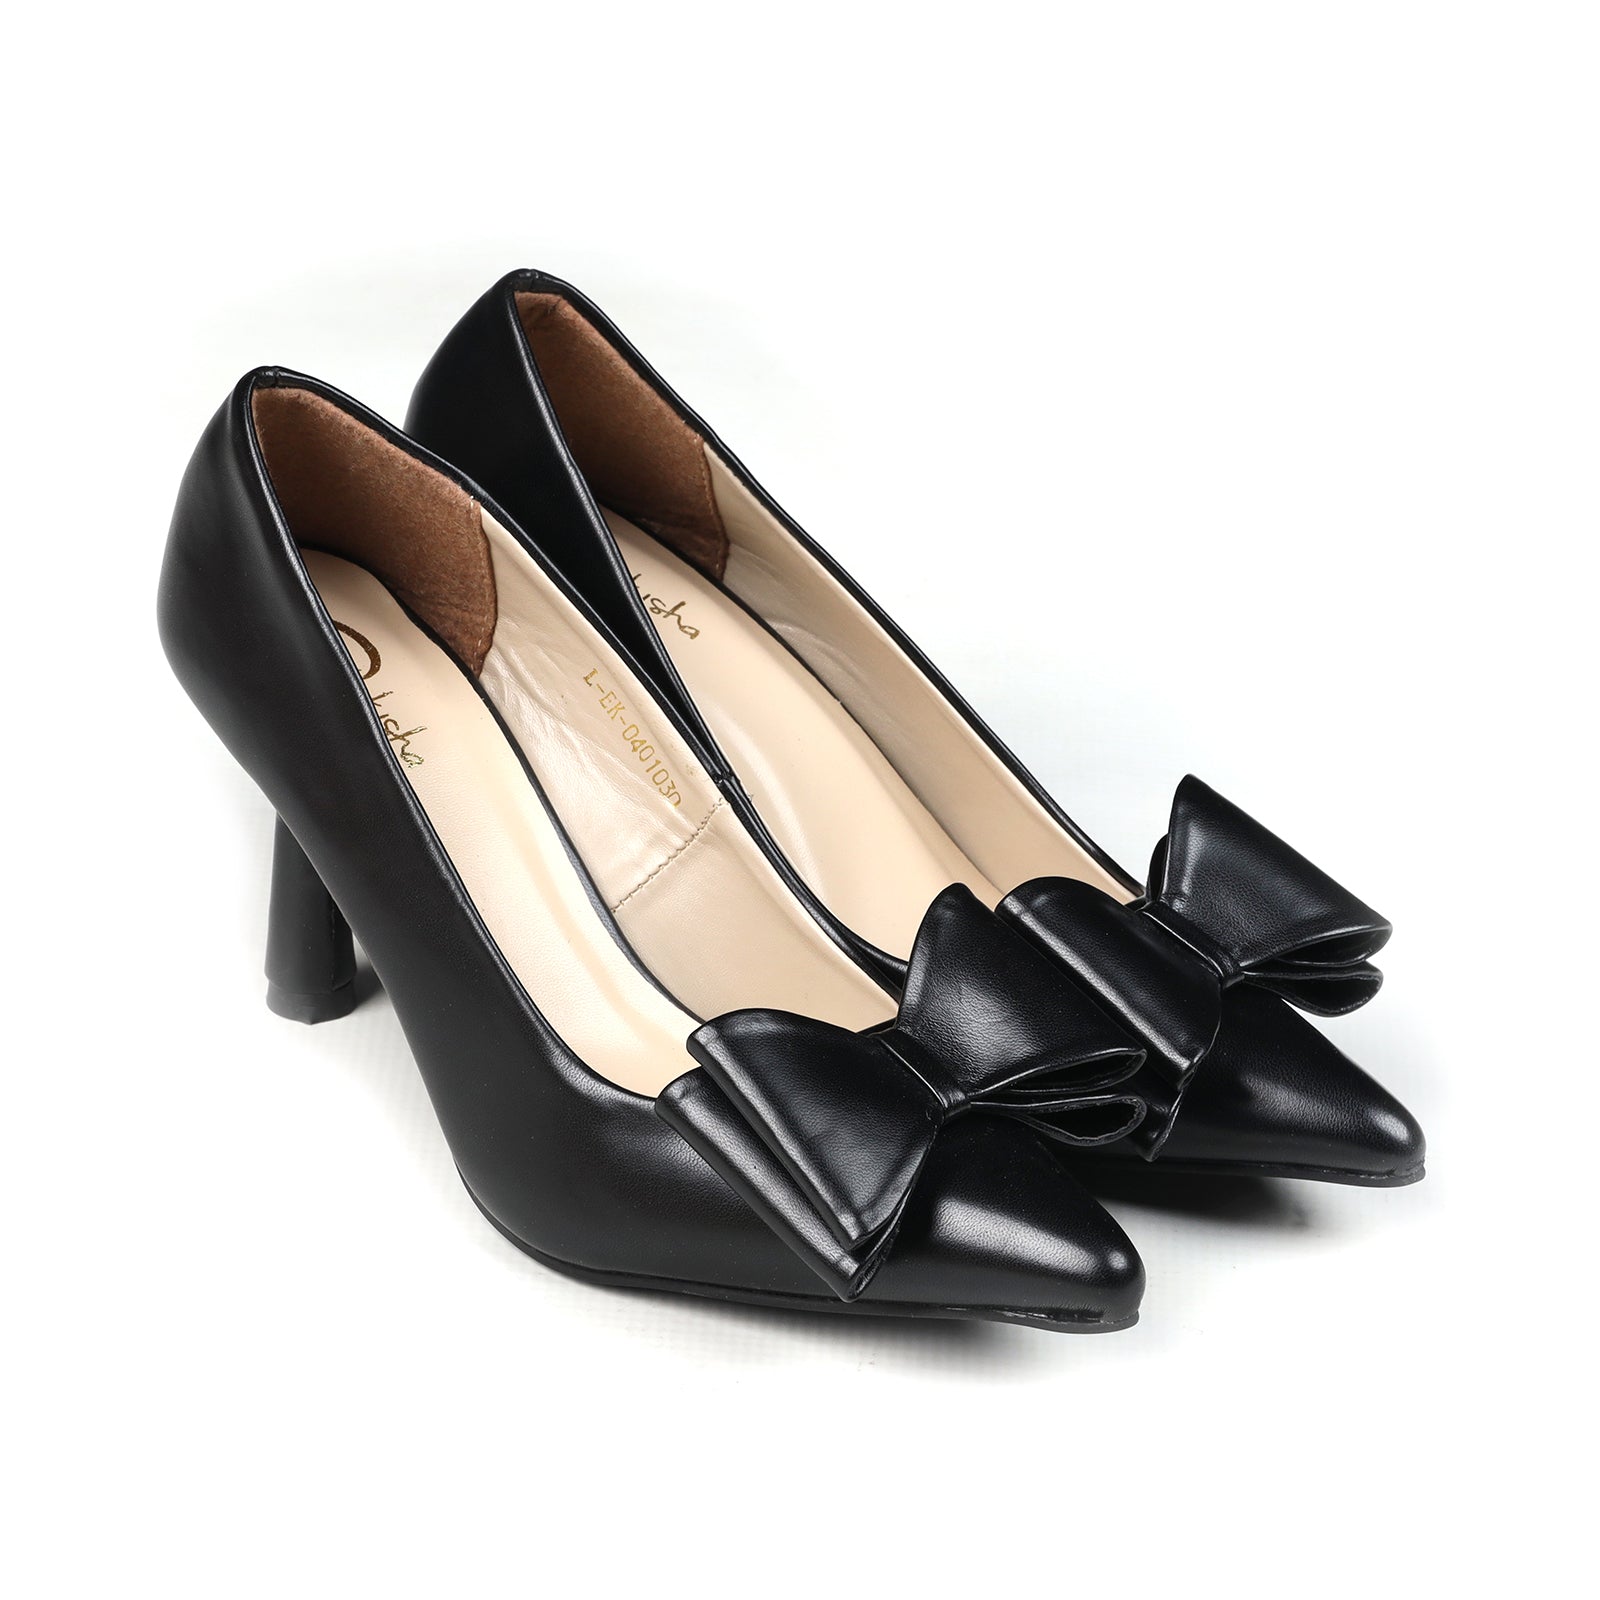 Buy Maroon Heeled Sandals for Women by Marc Loire Online | Ajio.com